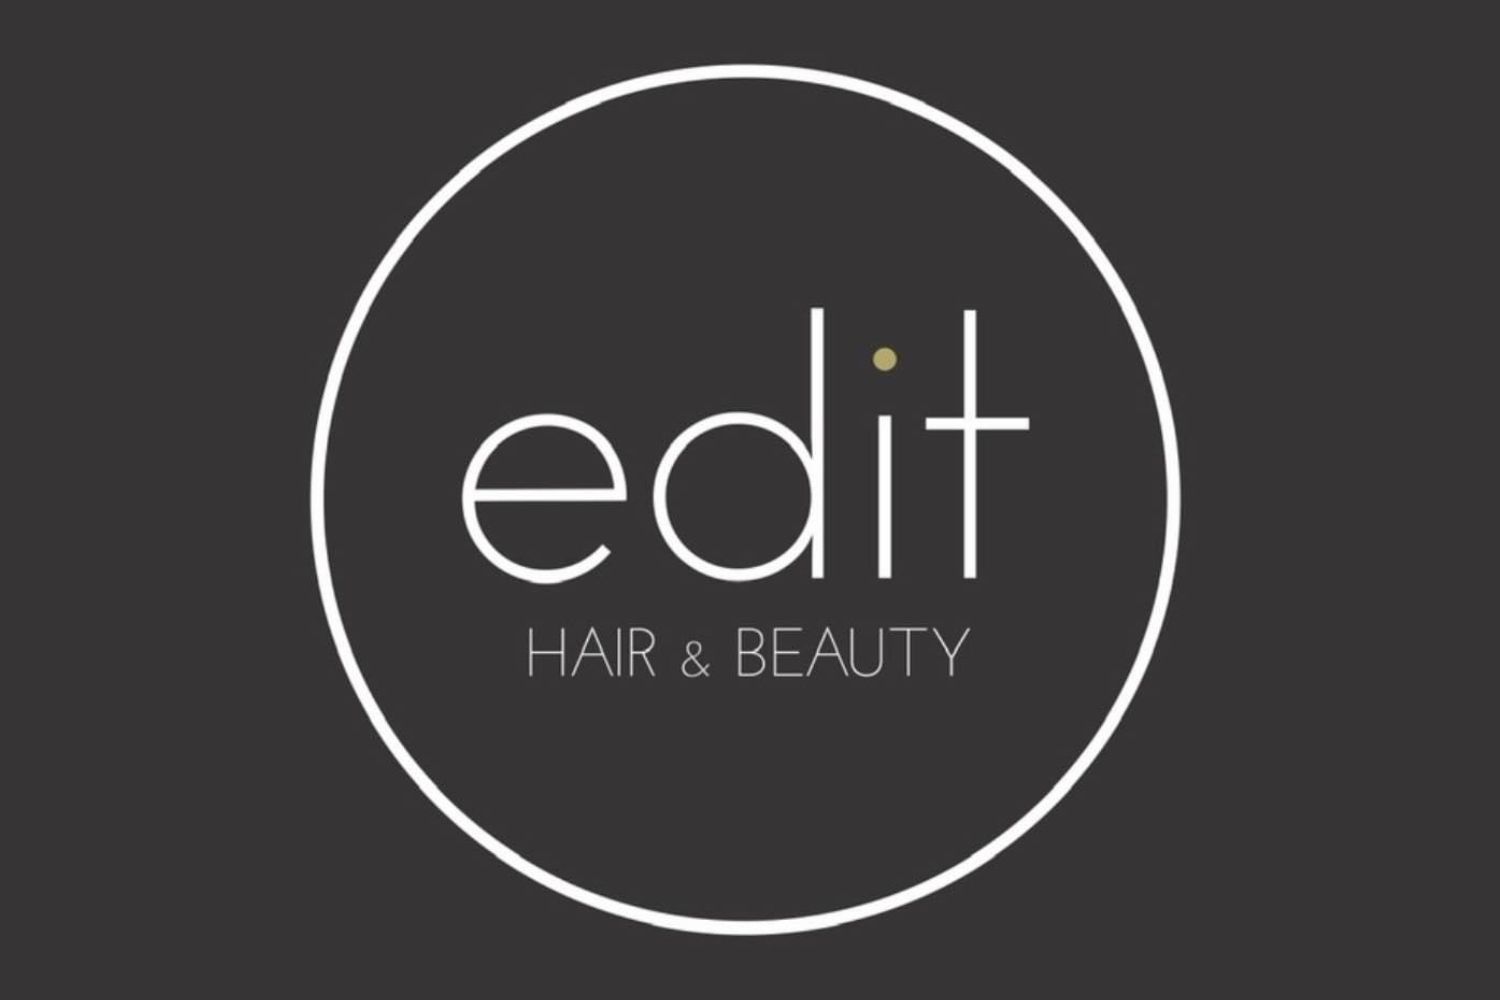 Edit Hair & Beauty - Mackenzie Region, New Zealand